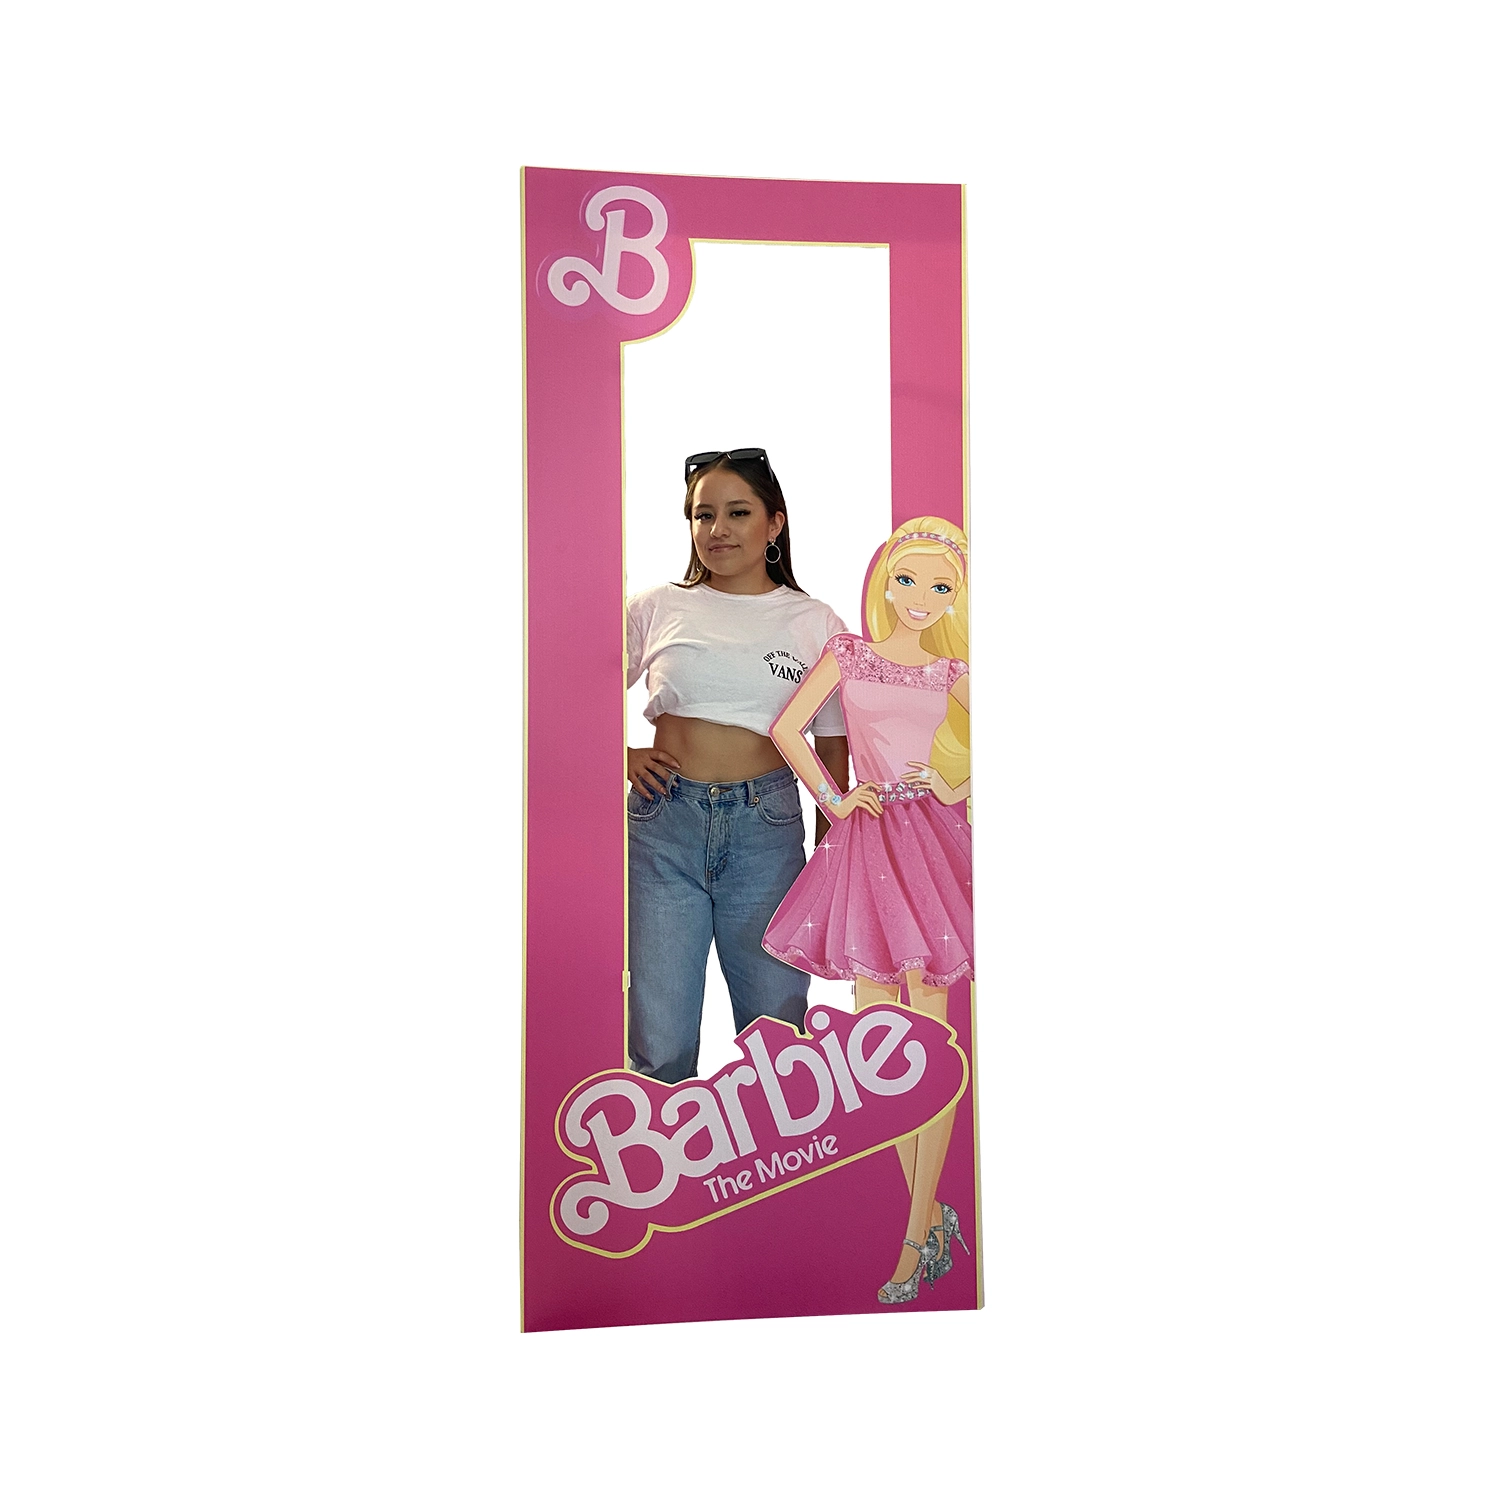 Caja Gigante de Barbie 2